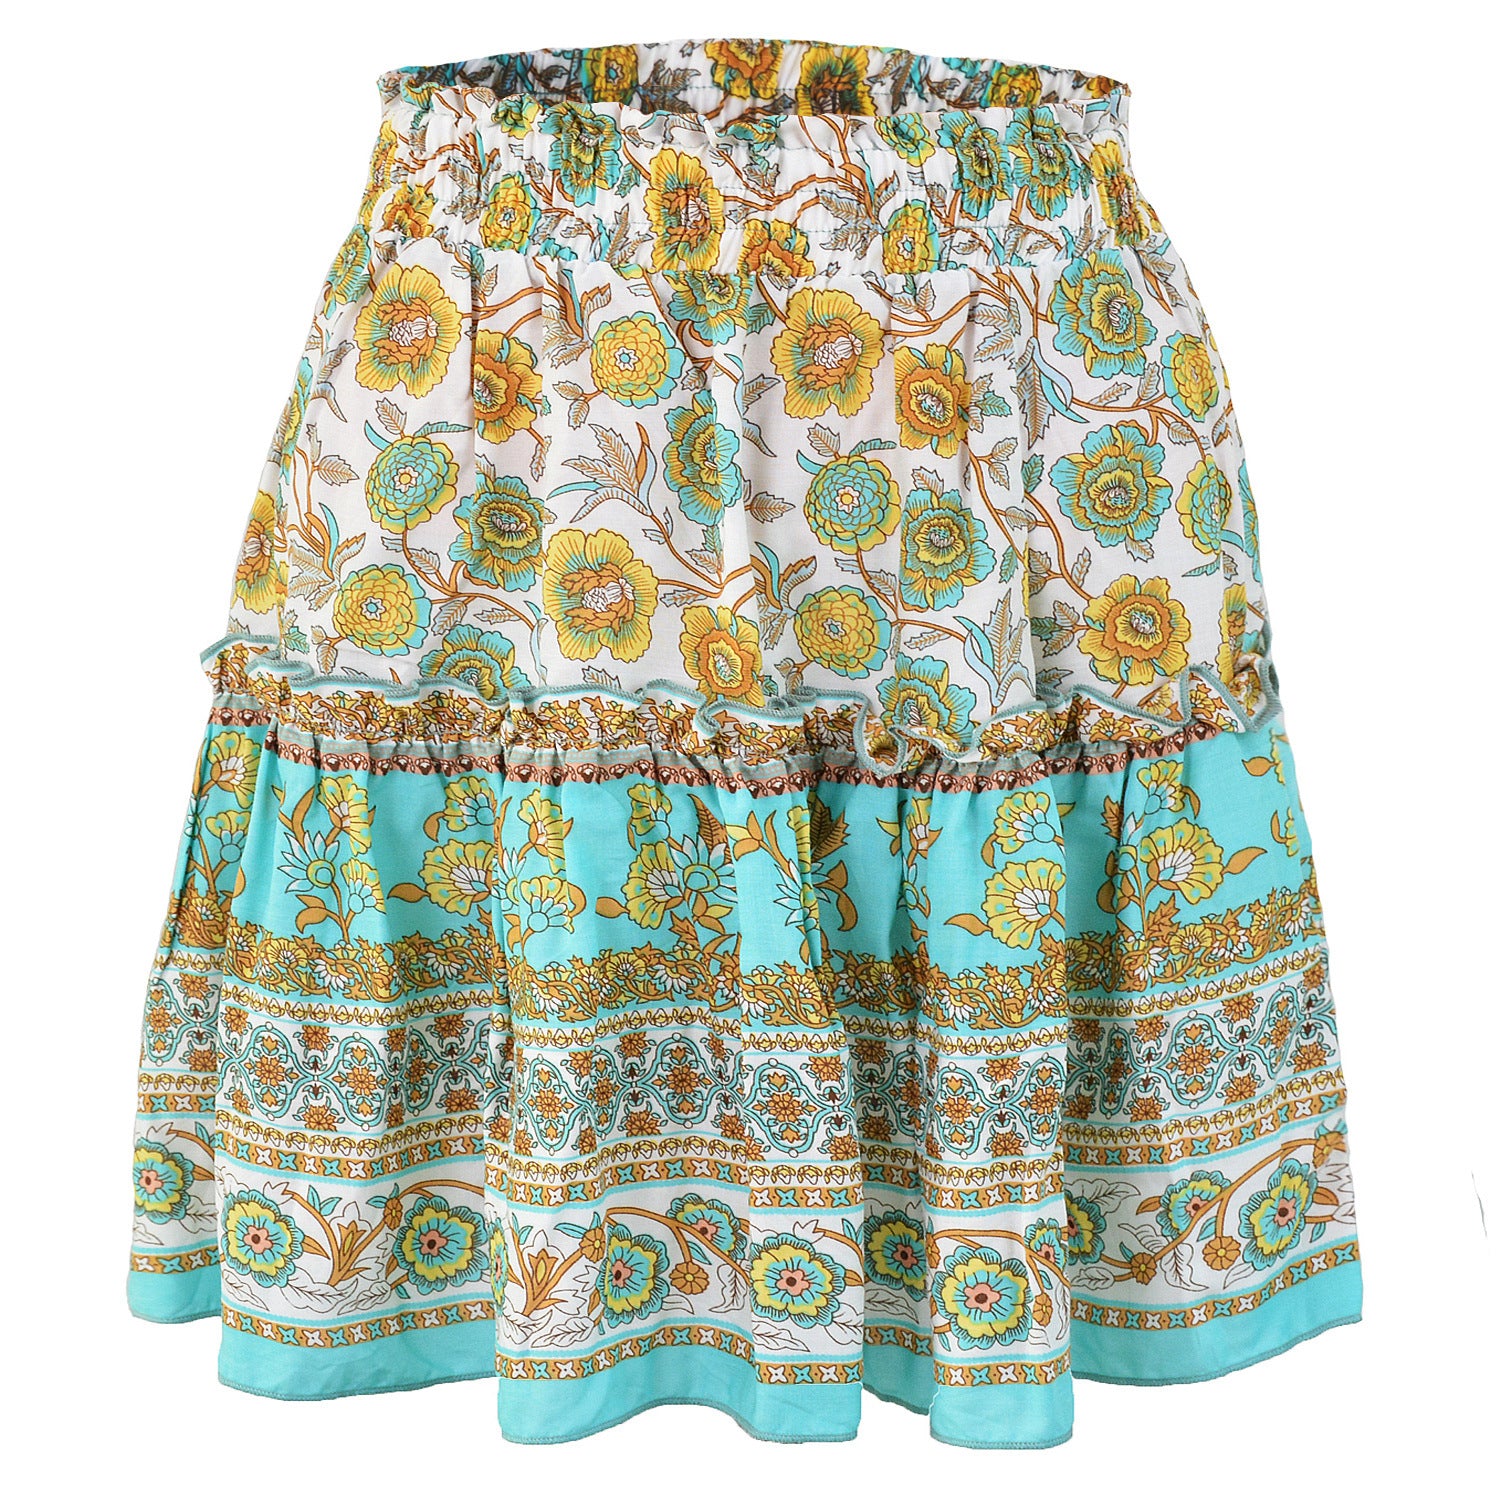 Women's Cotton Blend Printed Short Bohemian Ruffled Skirt